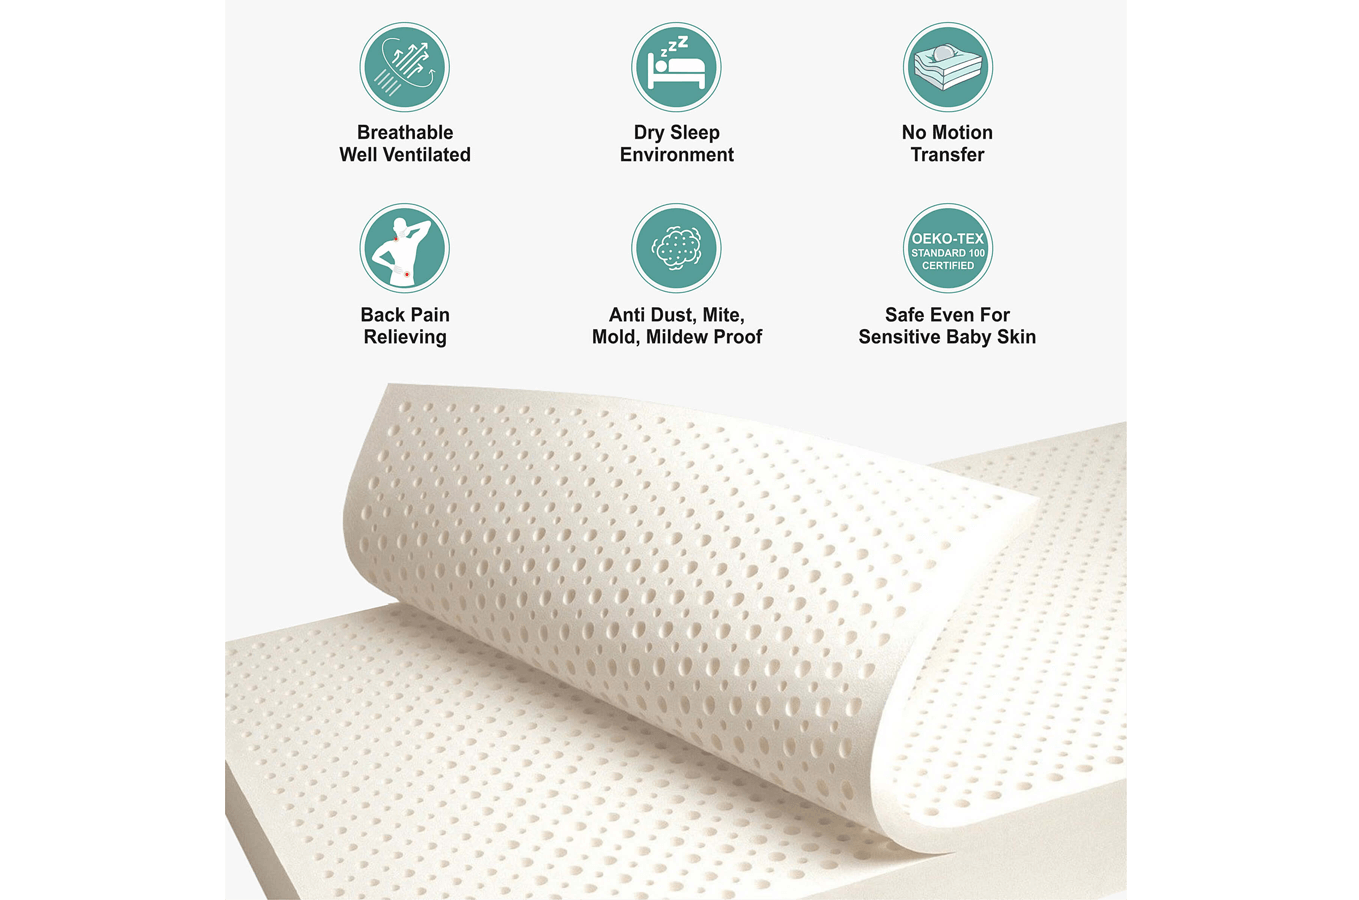 foams india natural latex pearl mattress